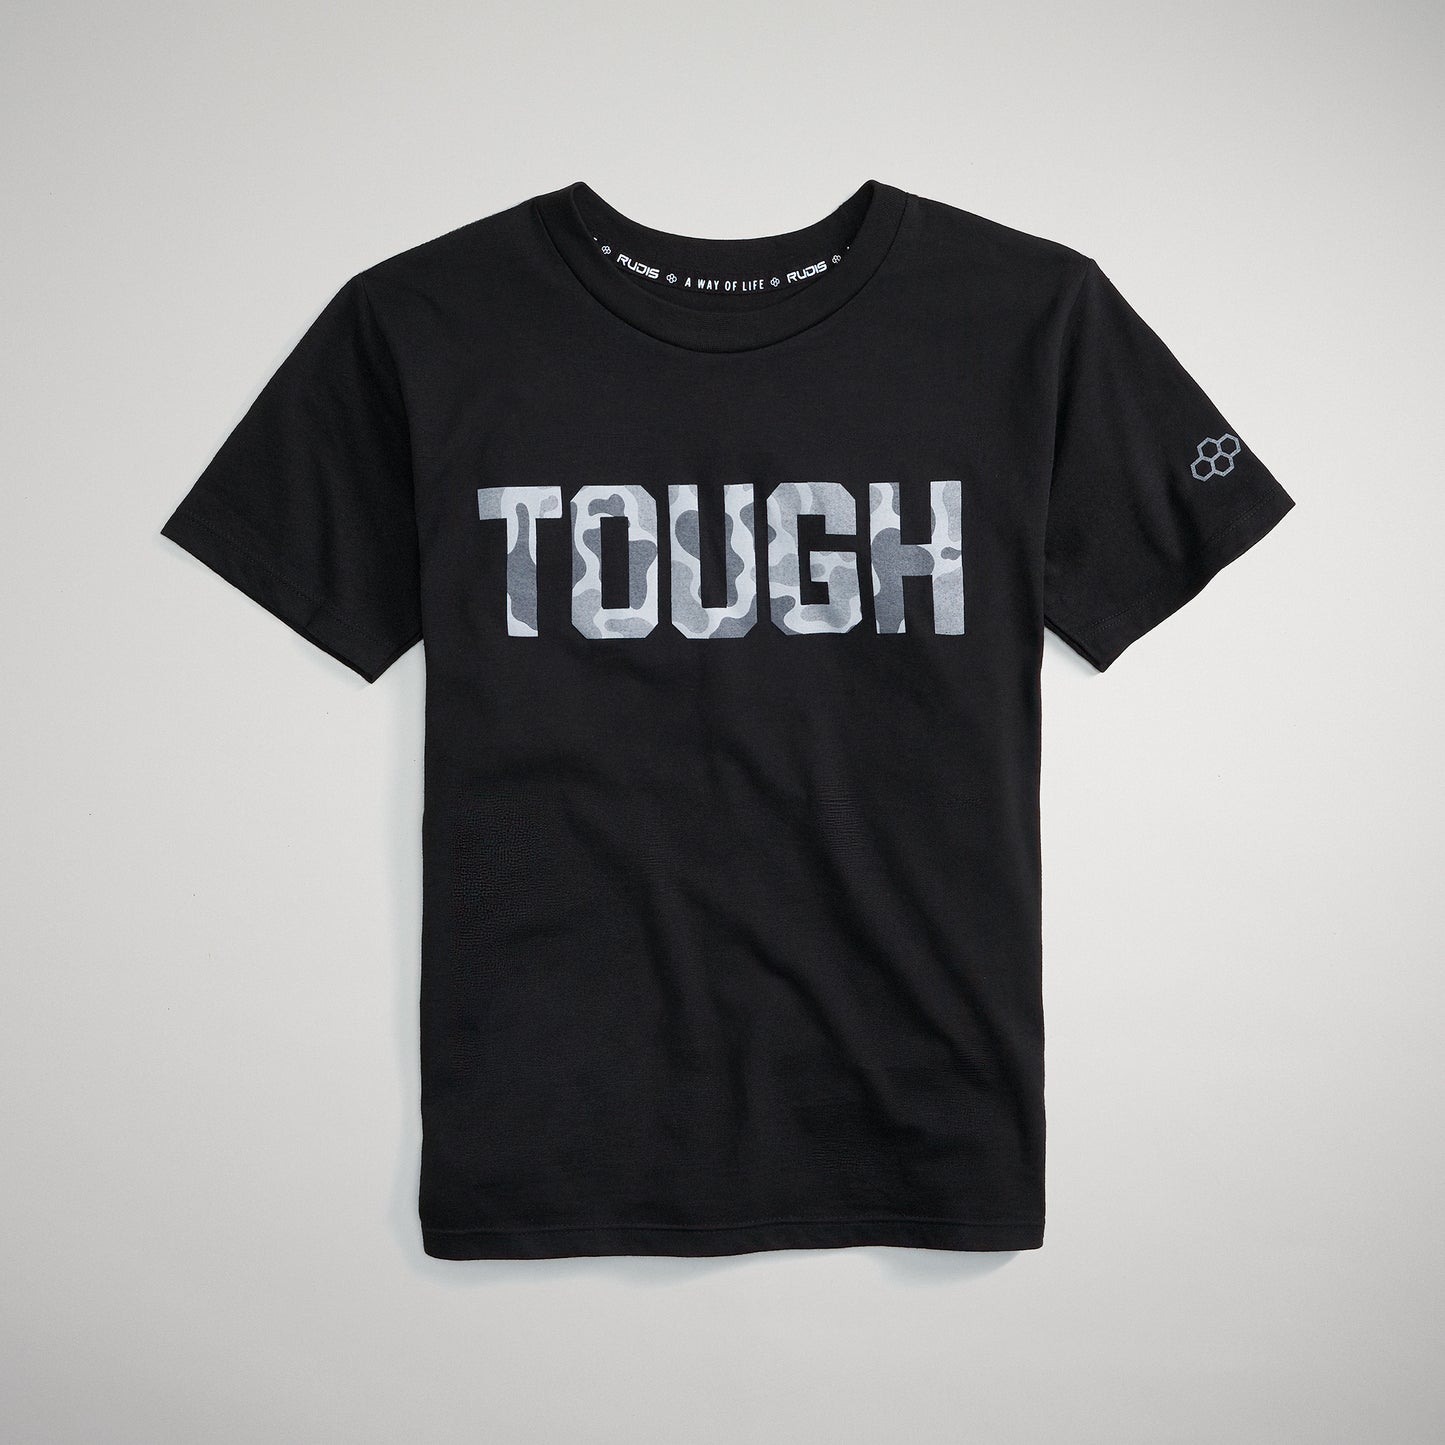 KS Tough Youth T-Shirt